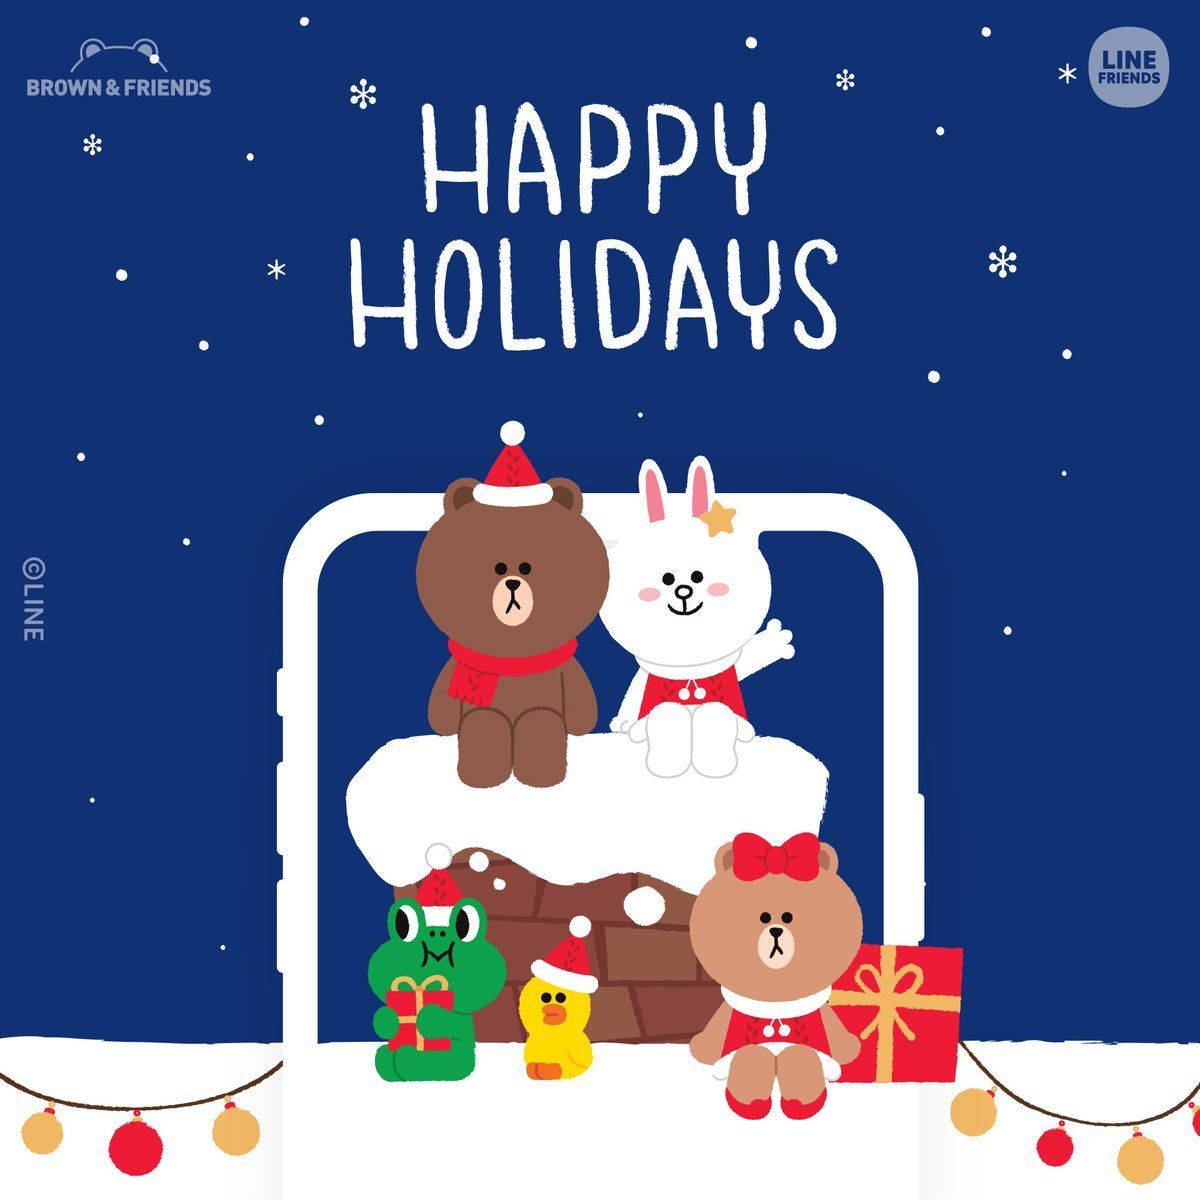 Line Friends Digital Holiday Card Wallpaper